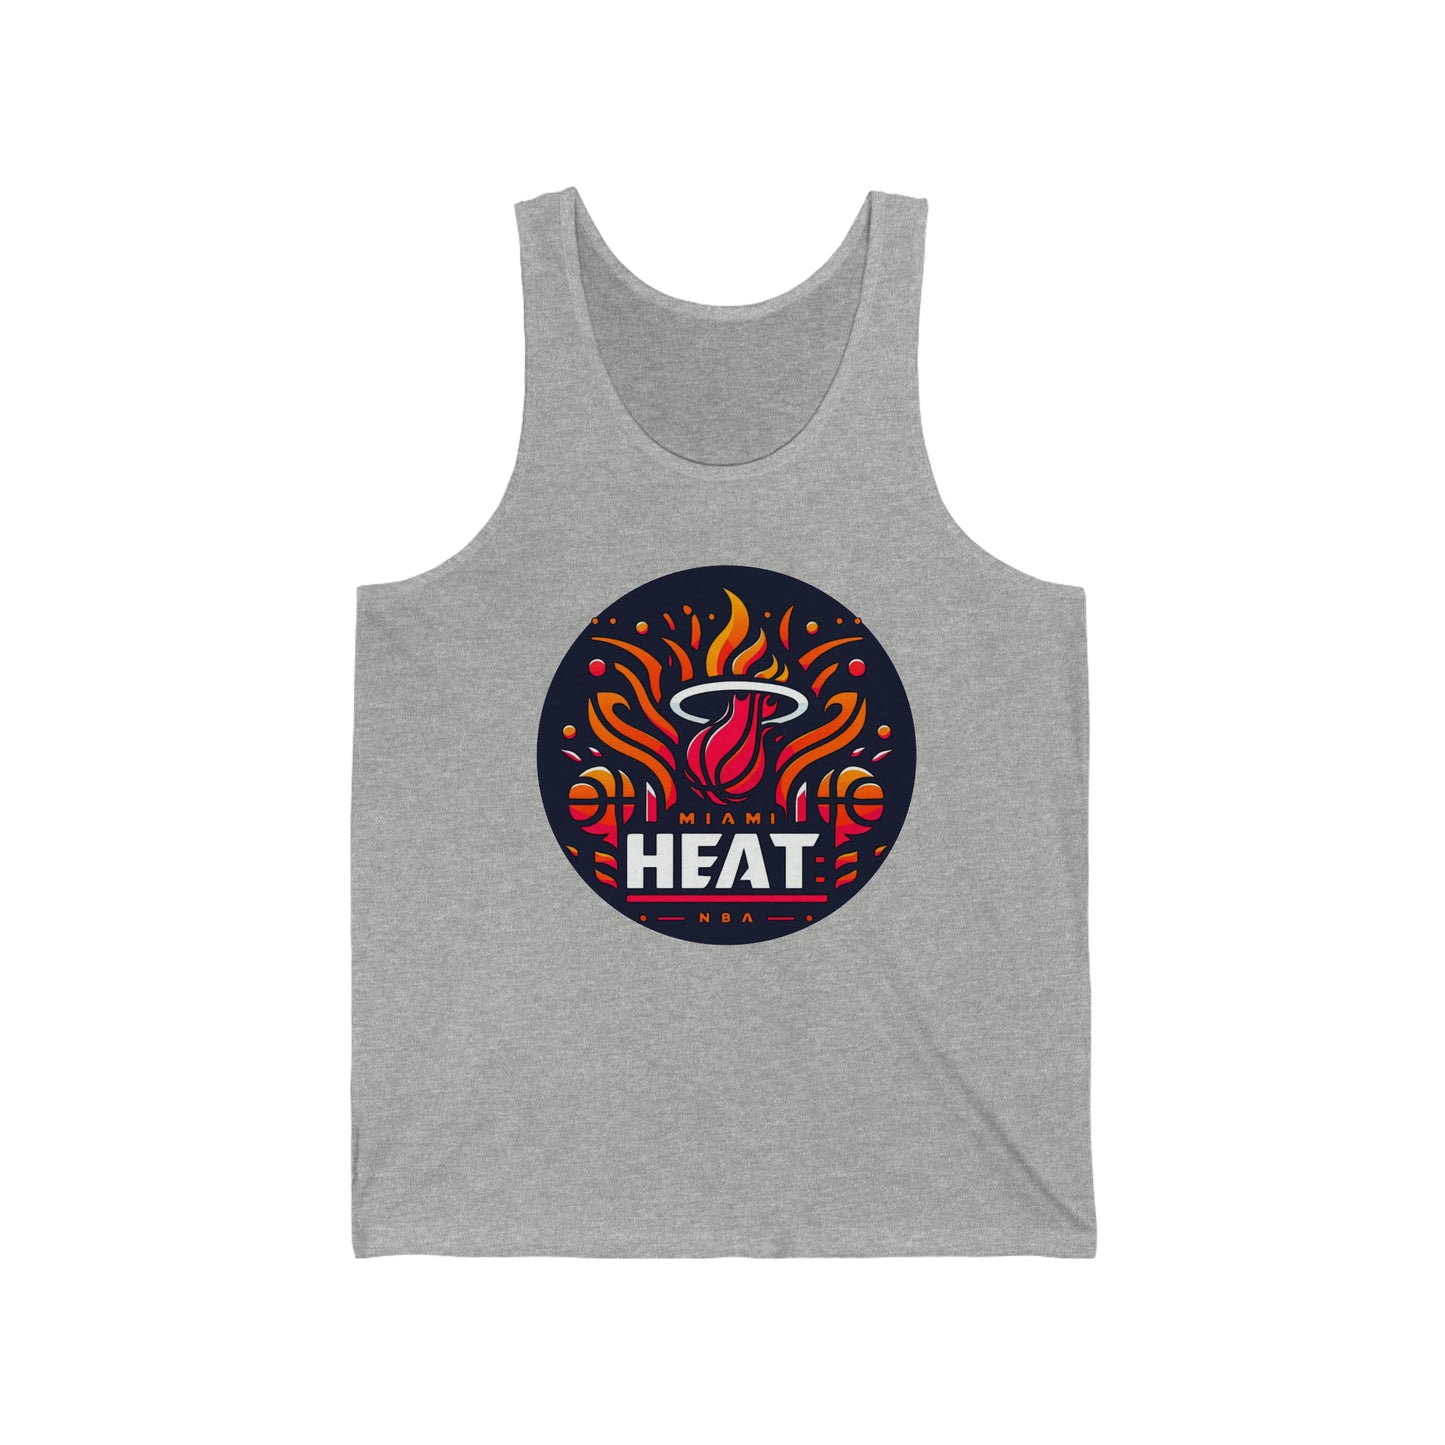 Cool and comfortable unisex Jersey Tank top (Miami Heat, NBA basketball team)